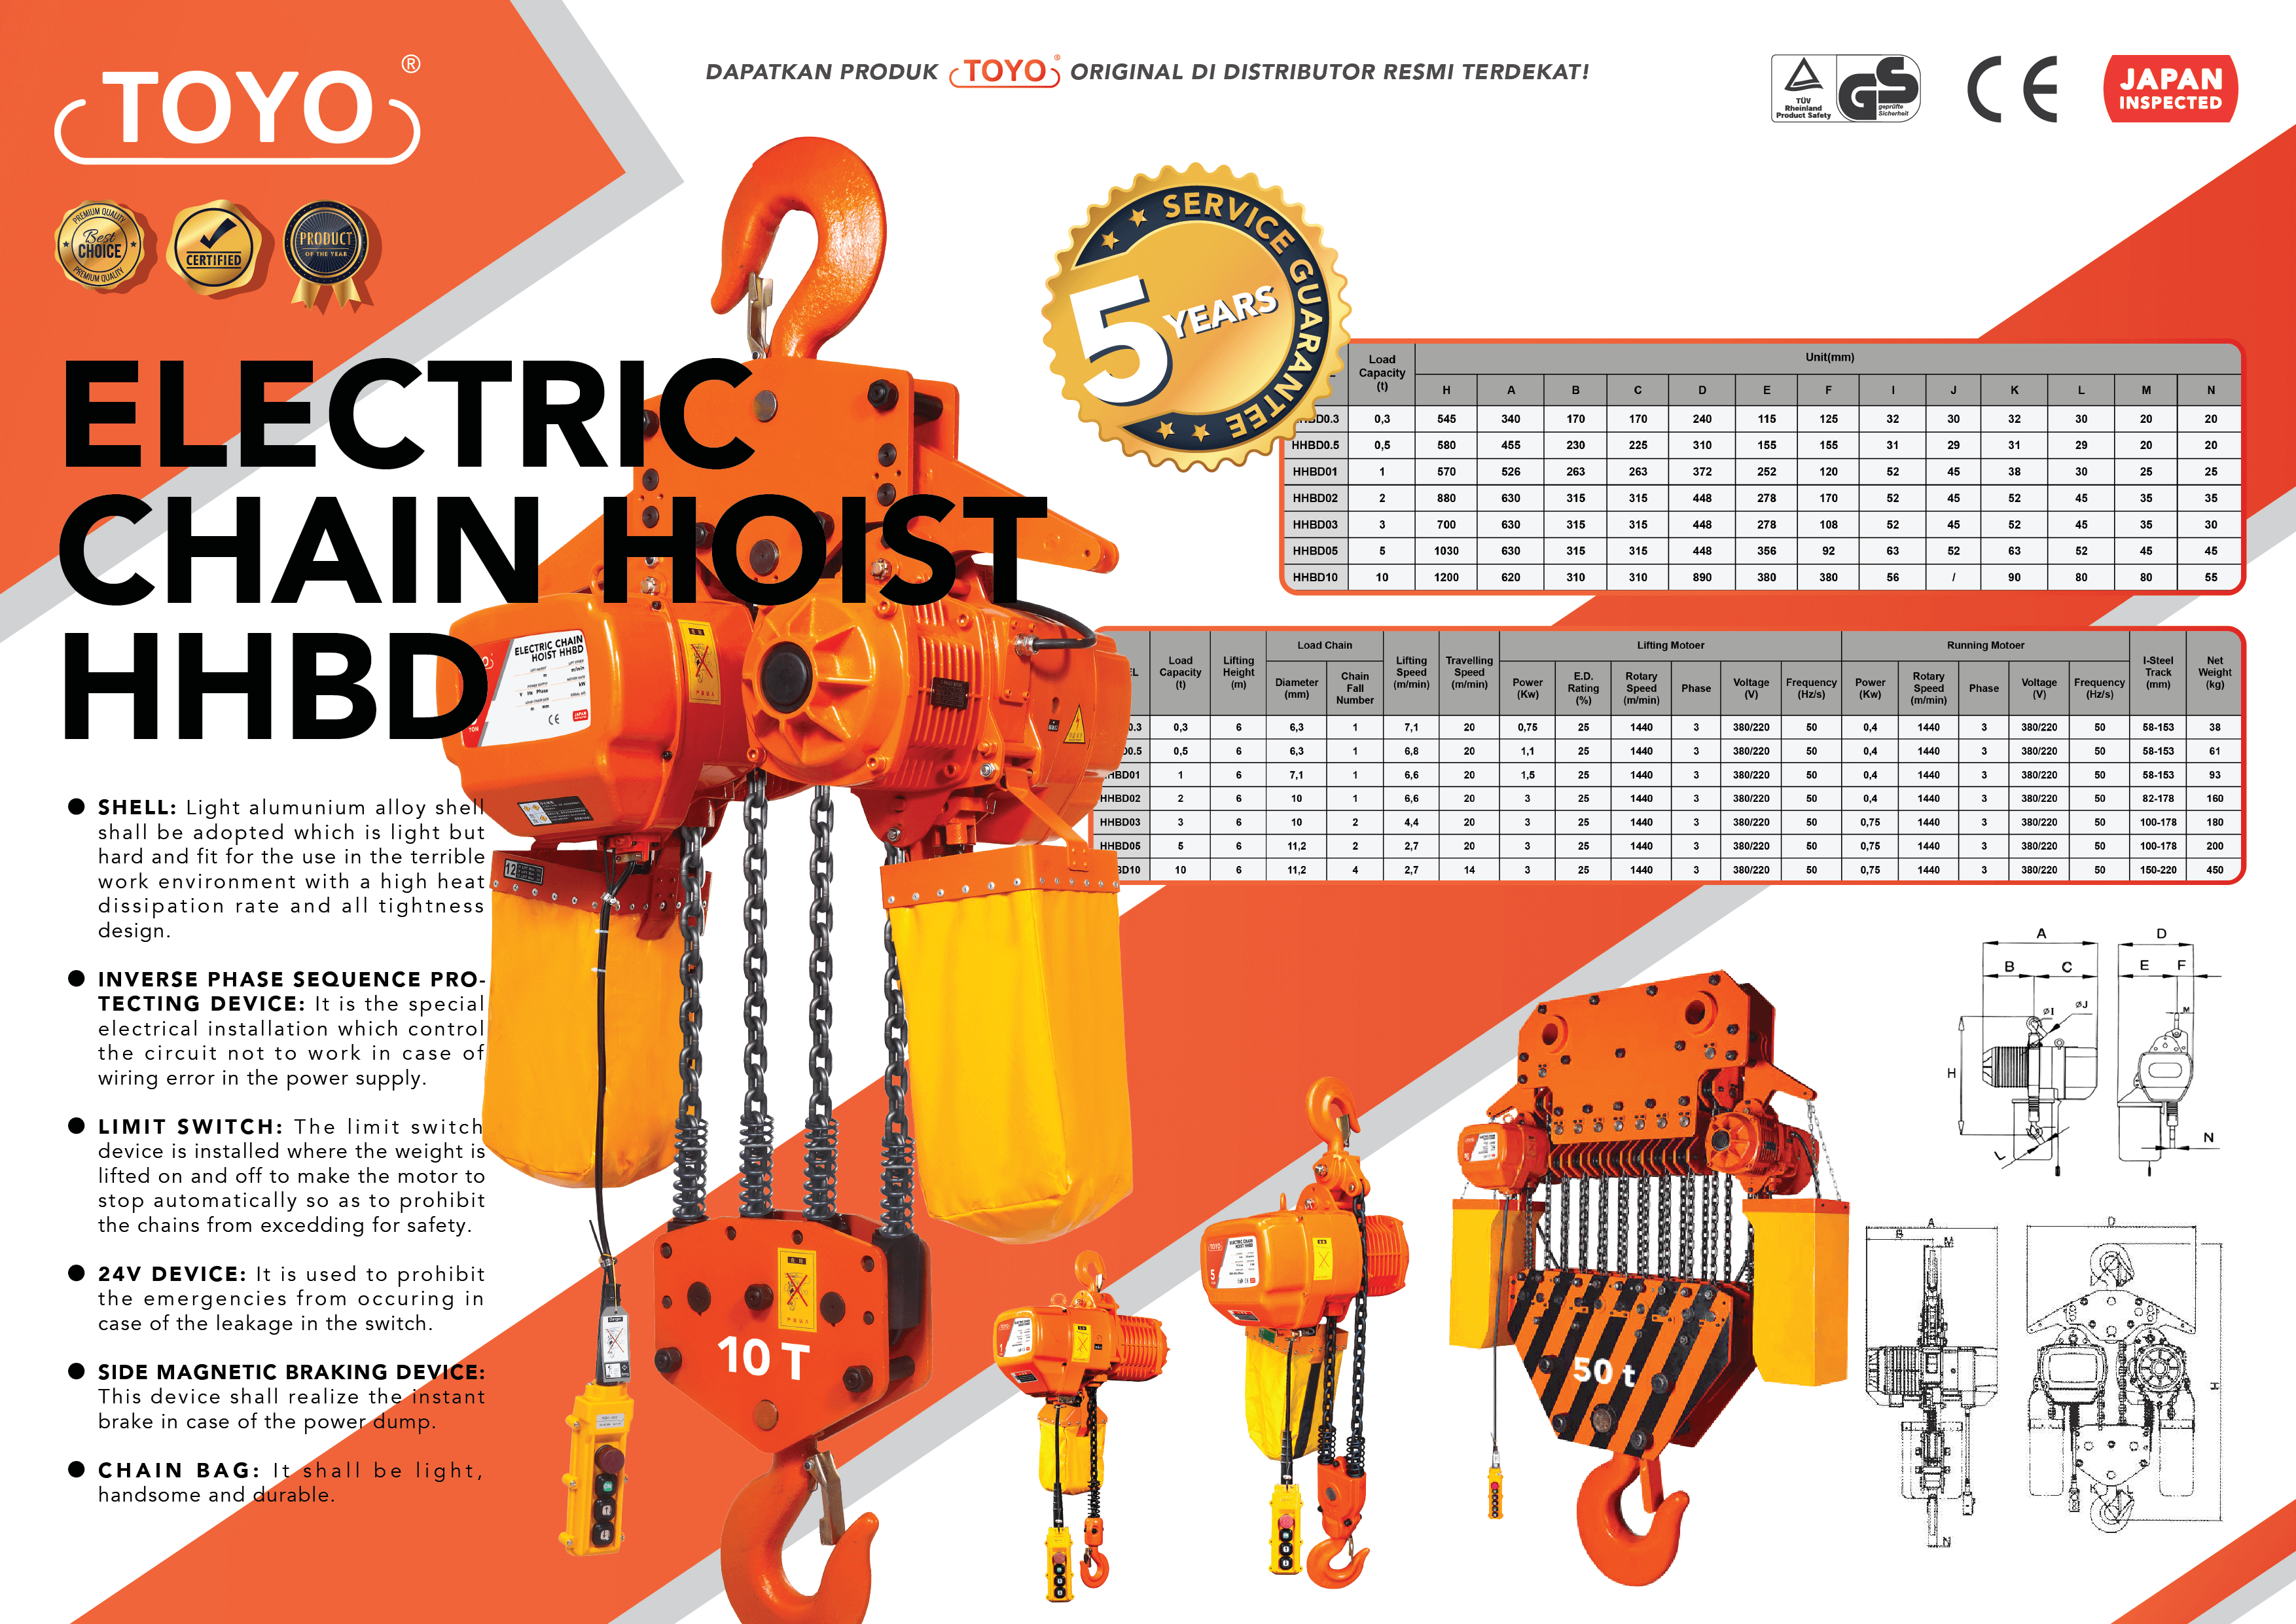 Spesifikasi Detail Electric Chain Hoist HHBD Type Toyo Original